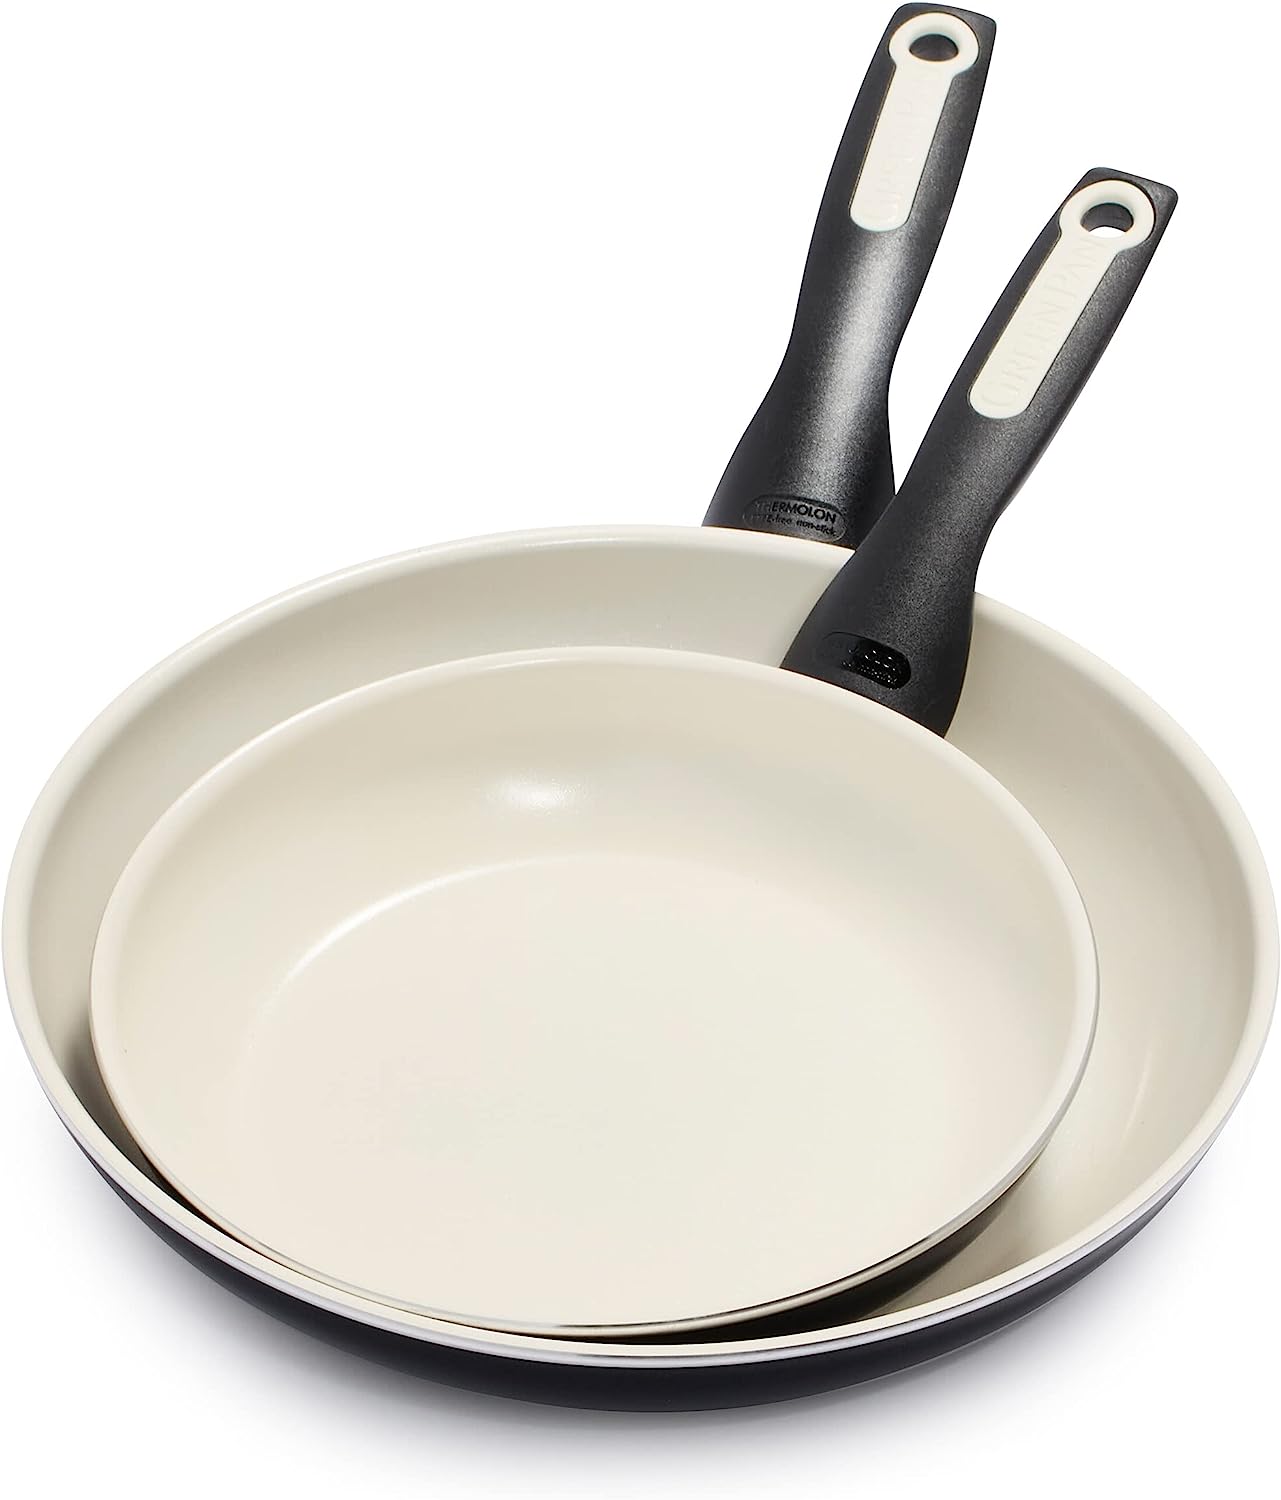 ceramic non stick fry pan review